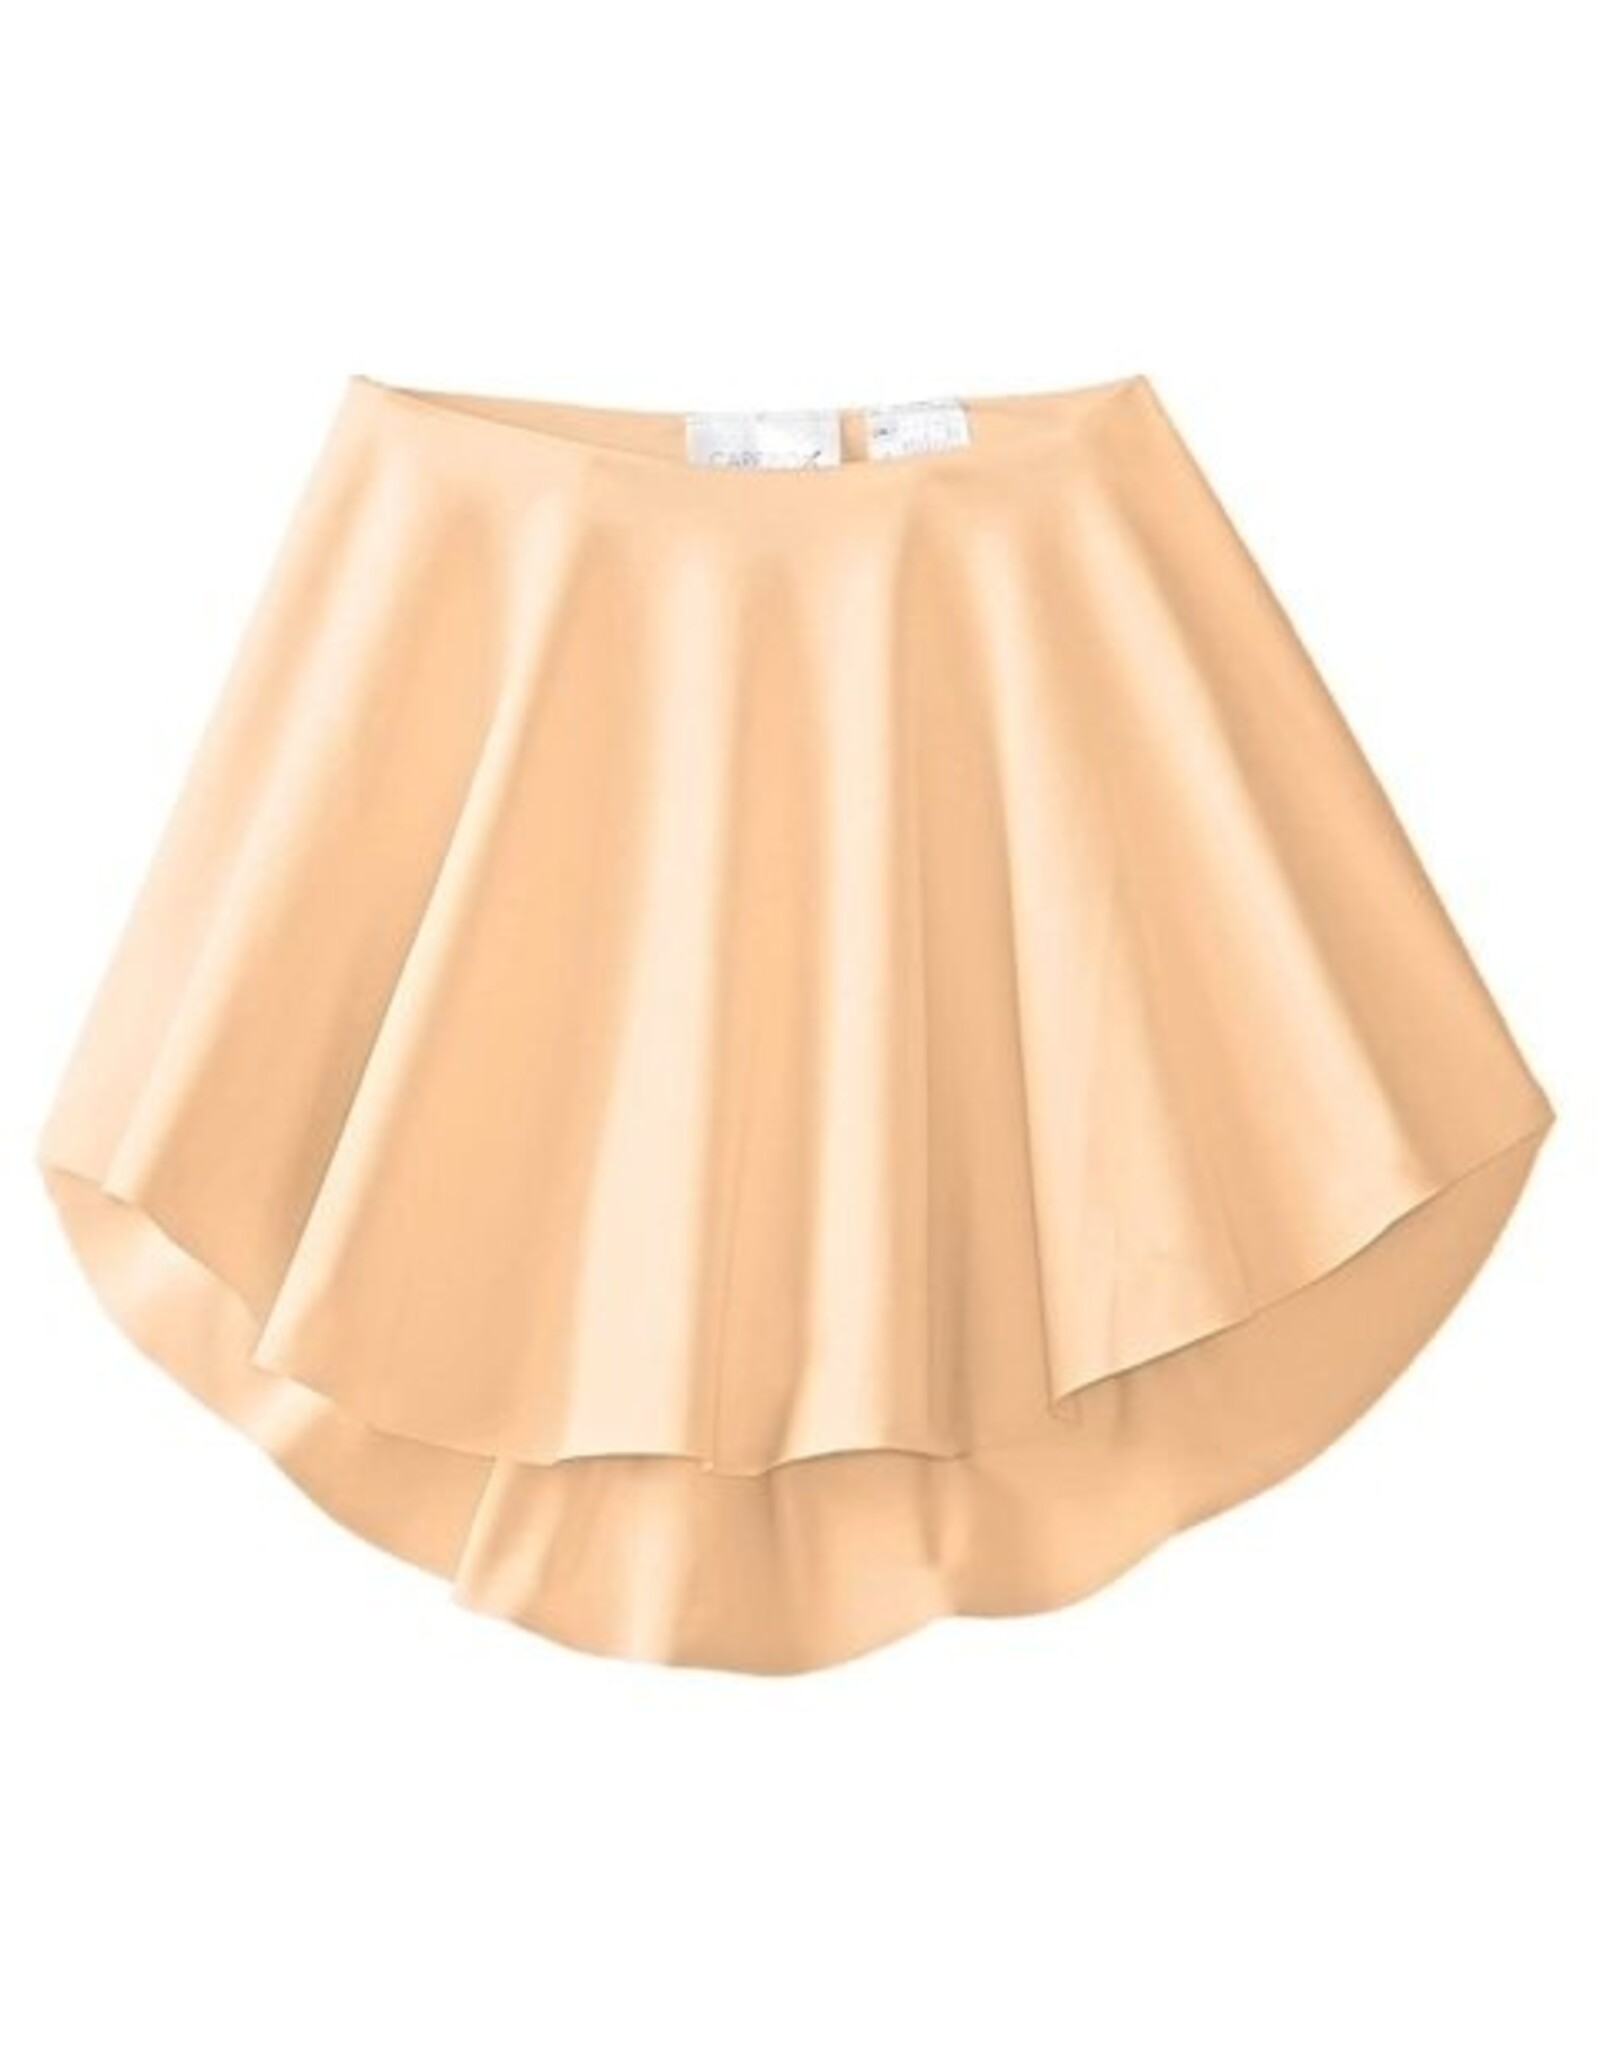 Capezio Circle Skirt - Butter